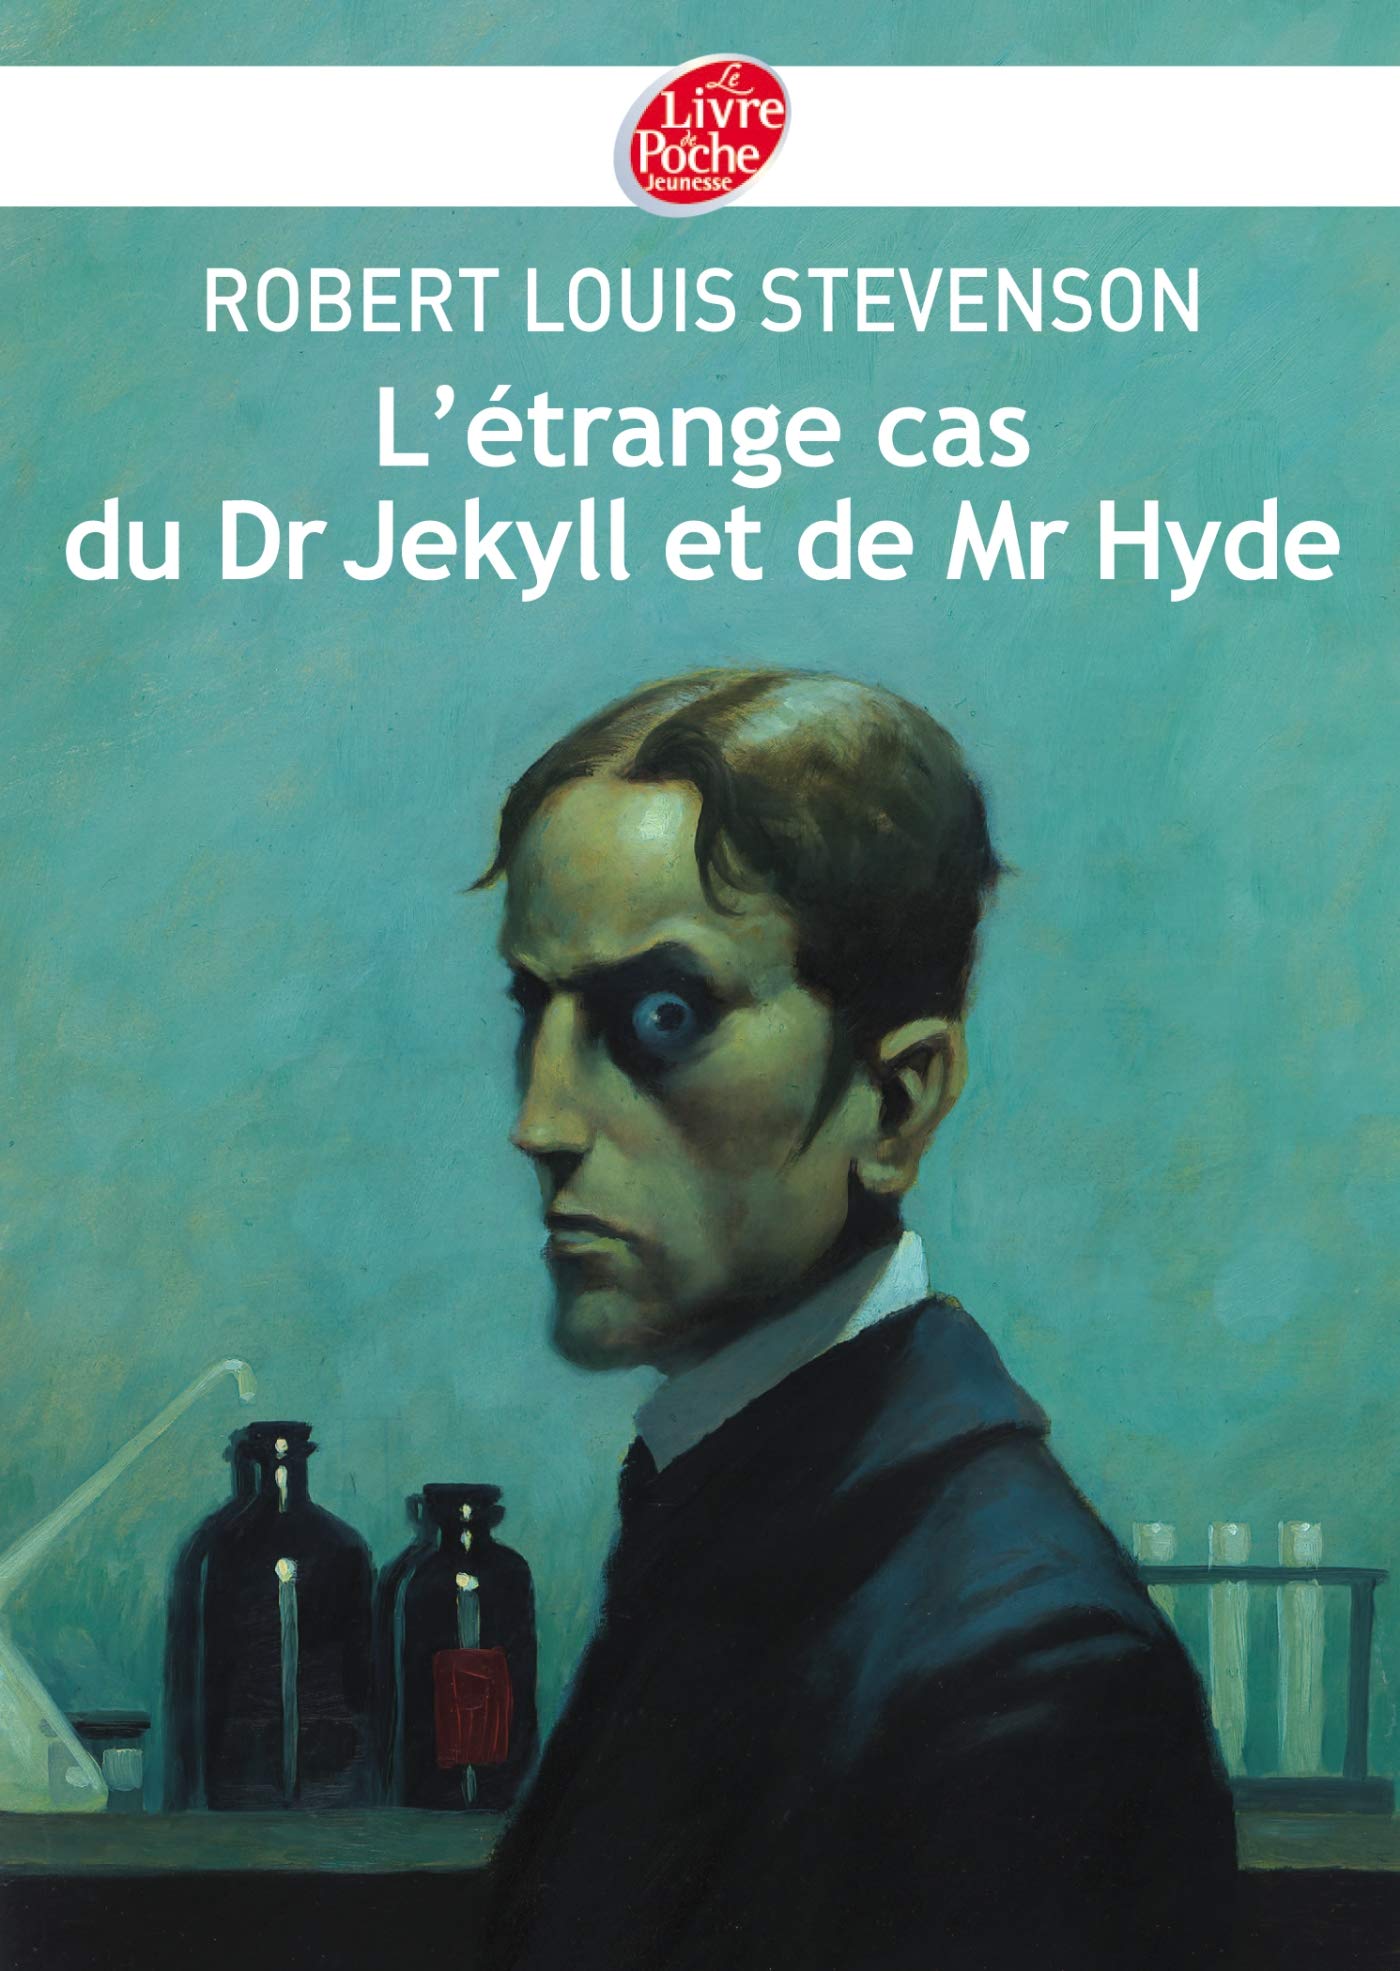 etrange cas du dr jekyll et mr hyde